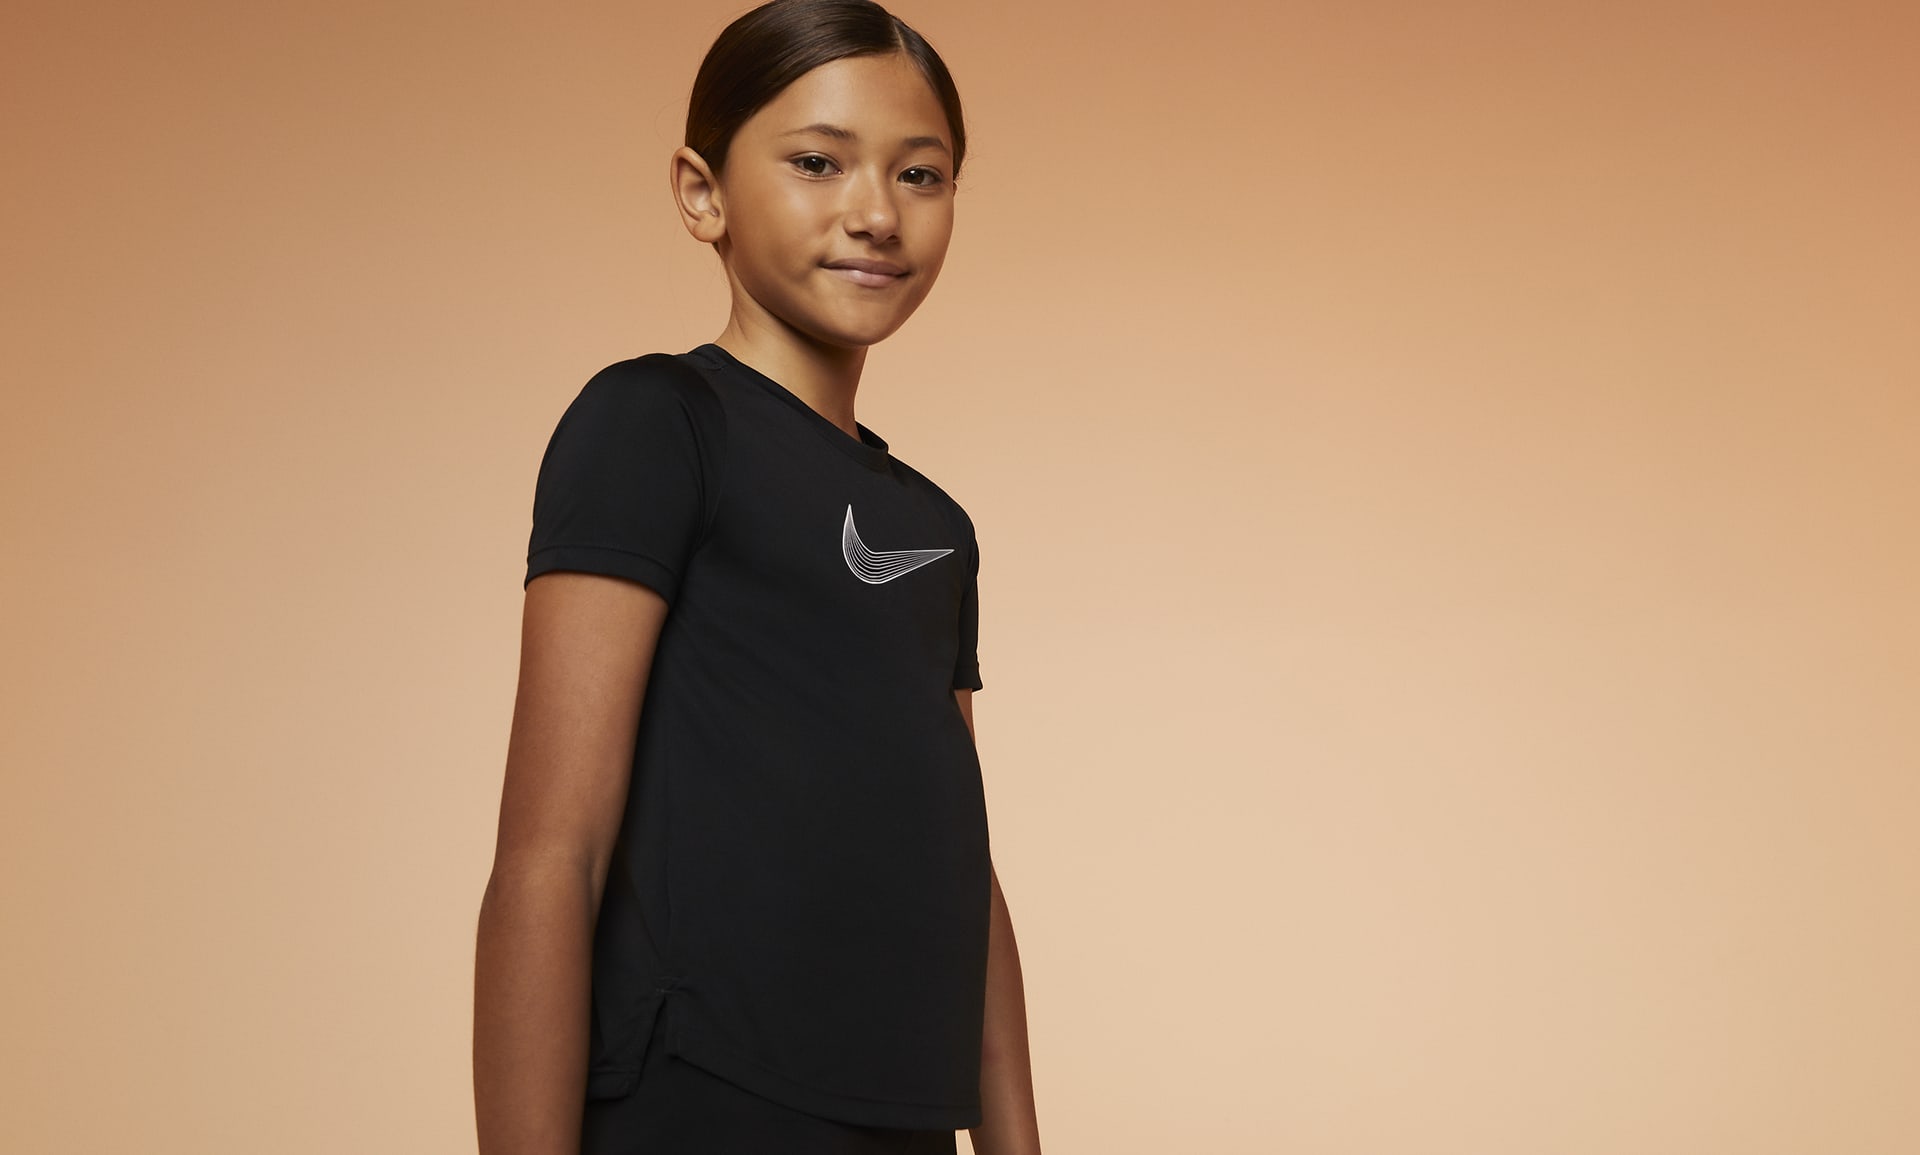 Nike One Big Kids' (Girls') Dri-FIT Short-Sleeve Training Top.